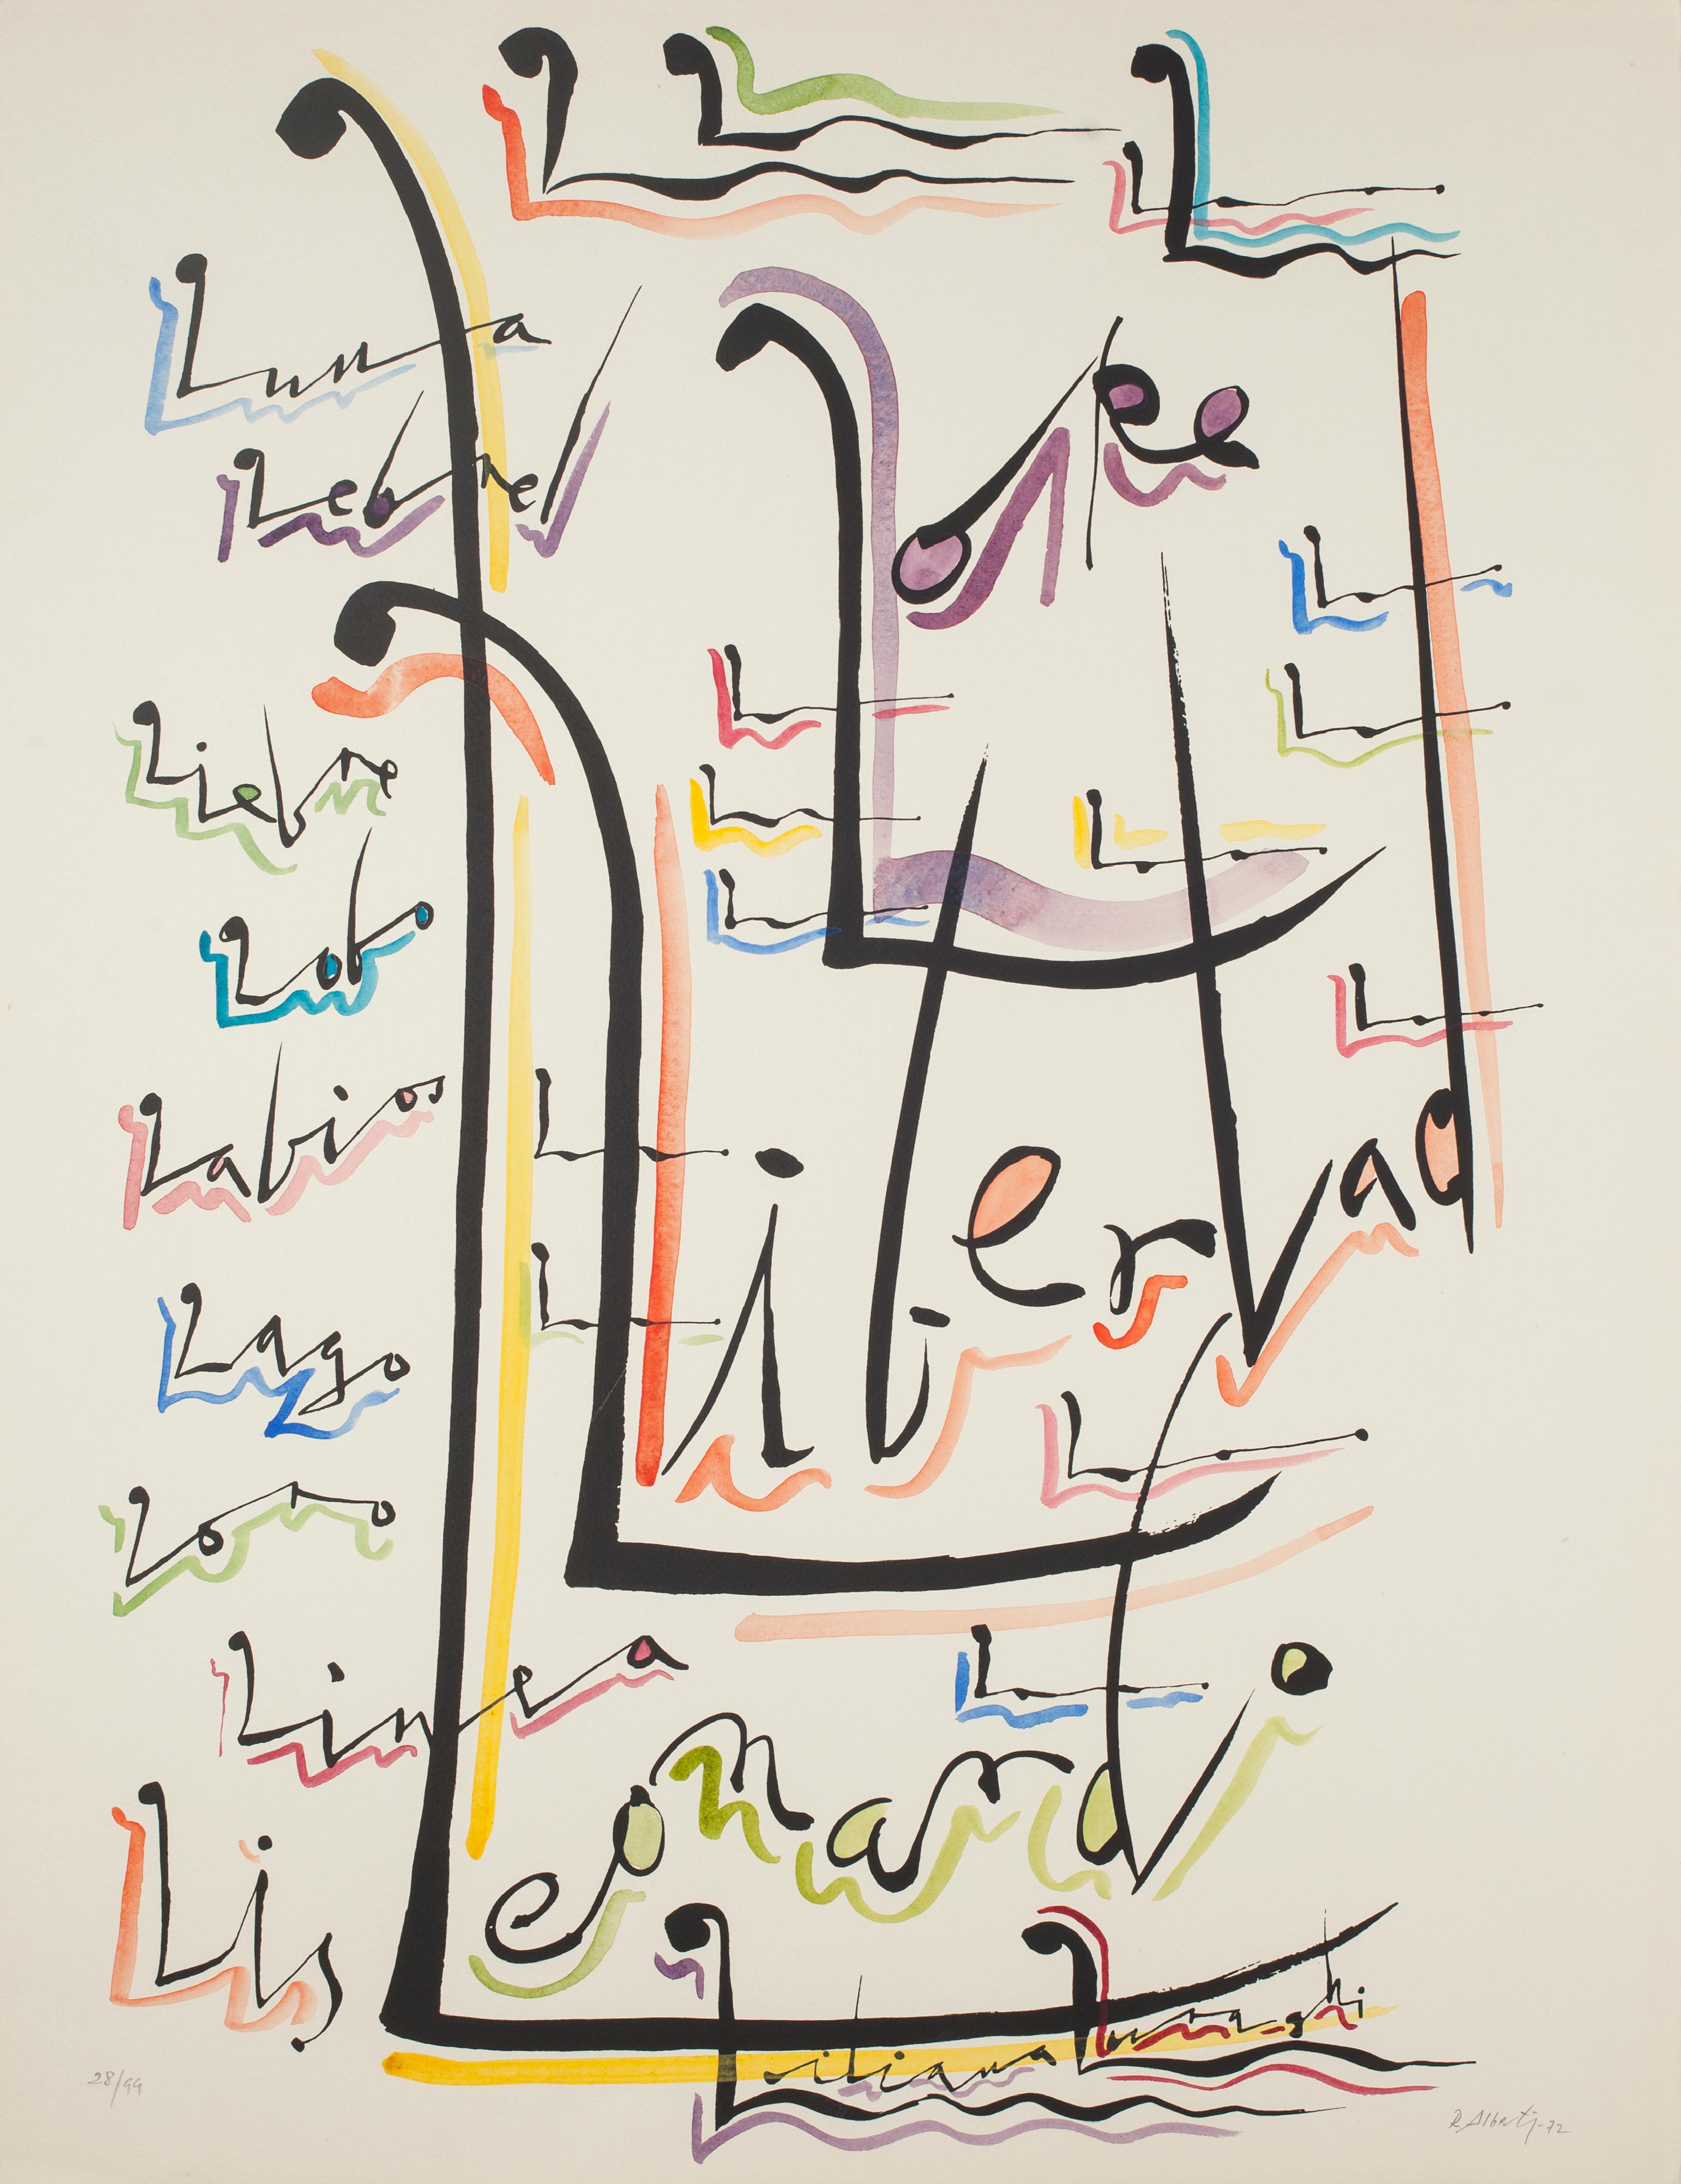 Rafael Alberti Abstract Print - Letter L - Hand-Colored Lithograph by Raphael Alberti - 1972